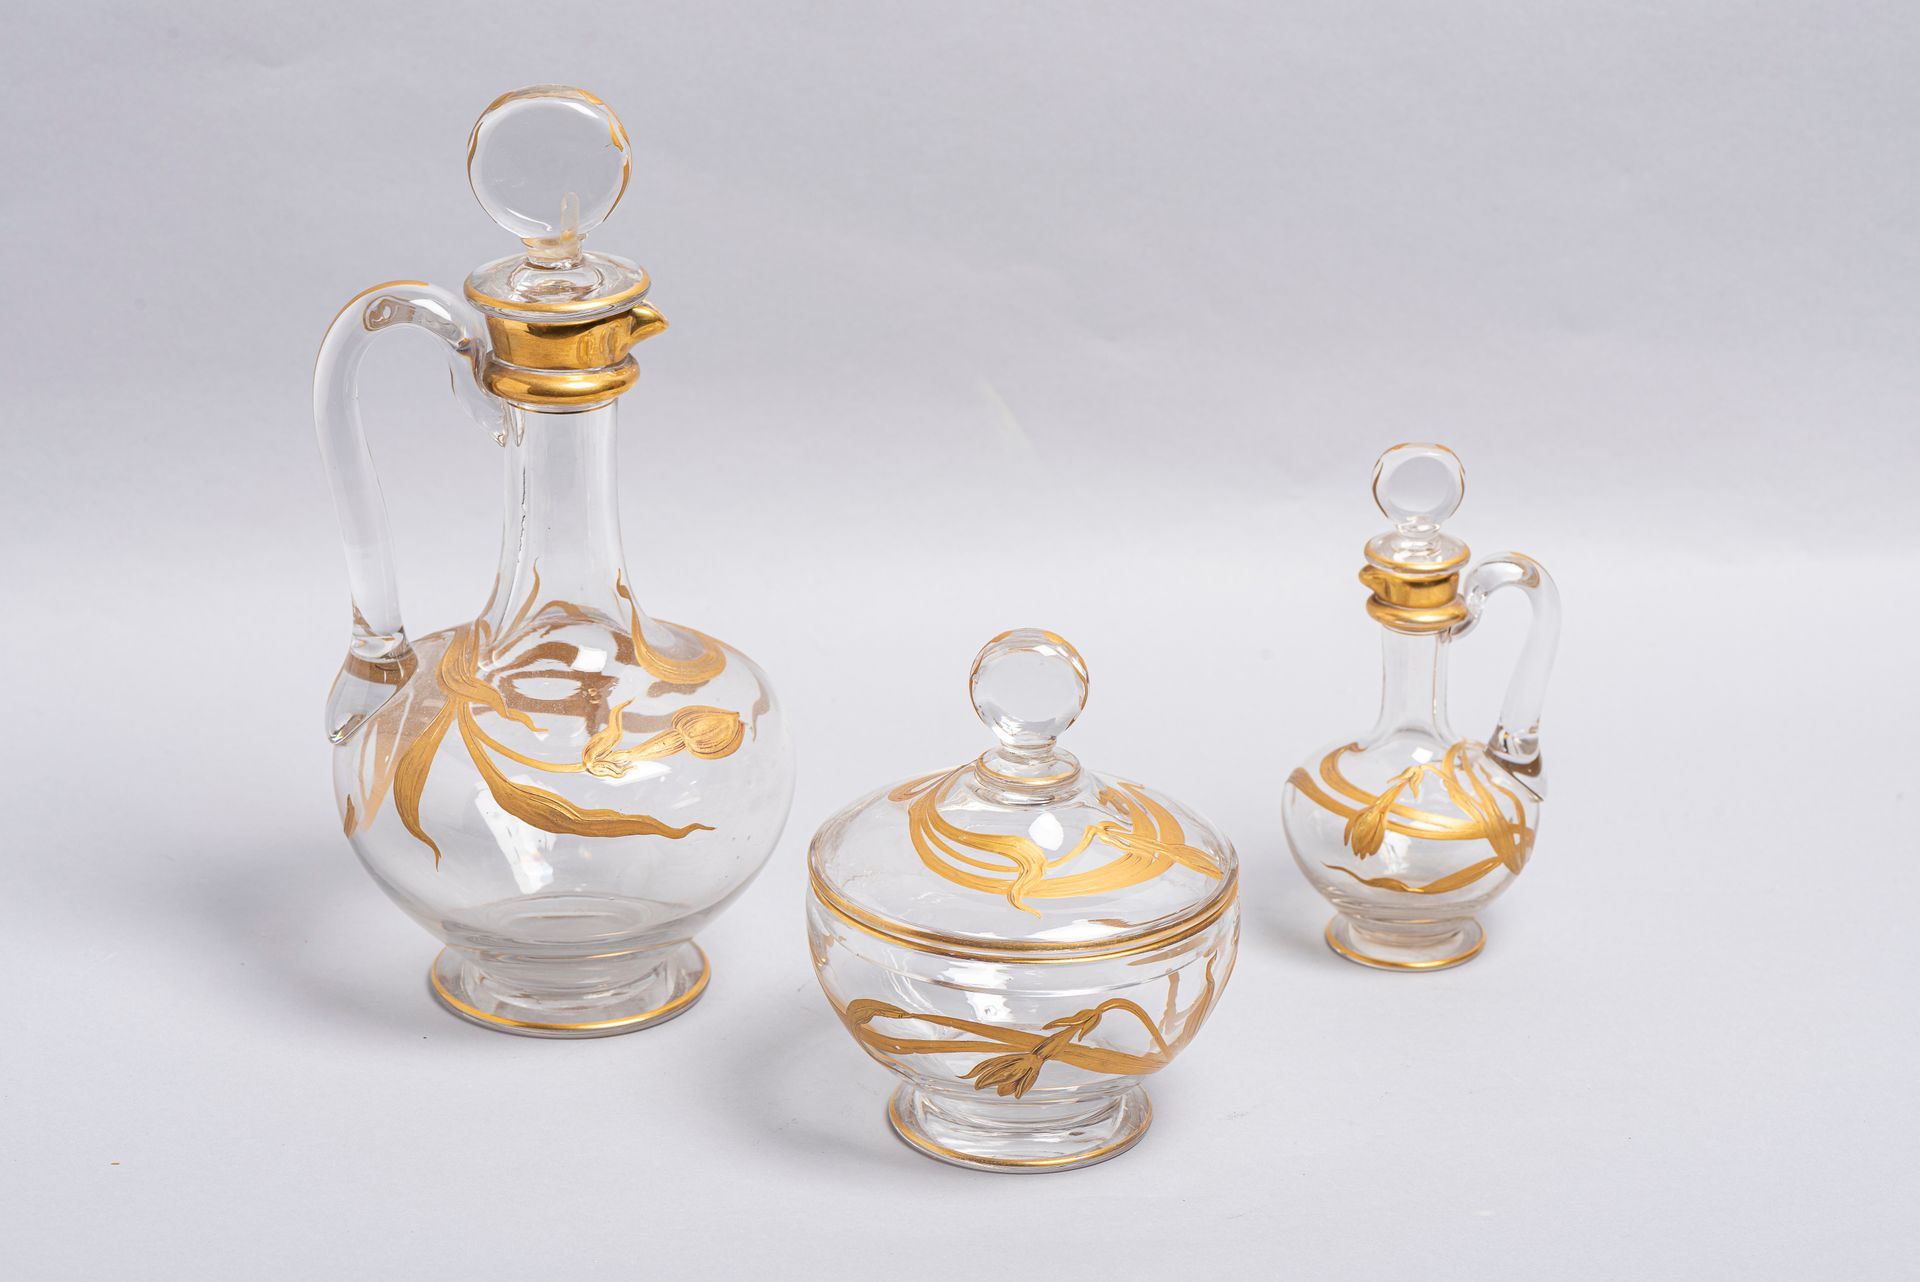 Null 
31.一套三件玻璃器皿，约1900年，包括一个咖啡杯，一个糖碗，一个有镀金植物装饰的瓶子（事故：瓶塞被粘回）。